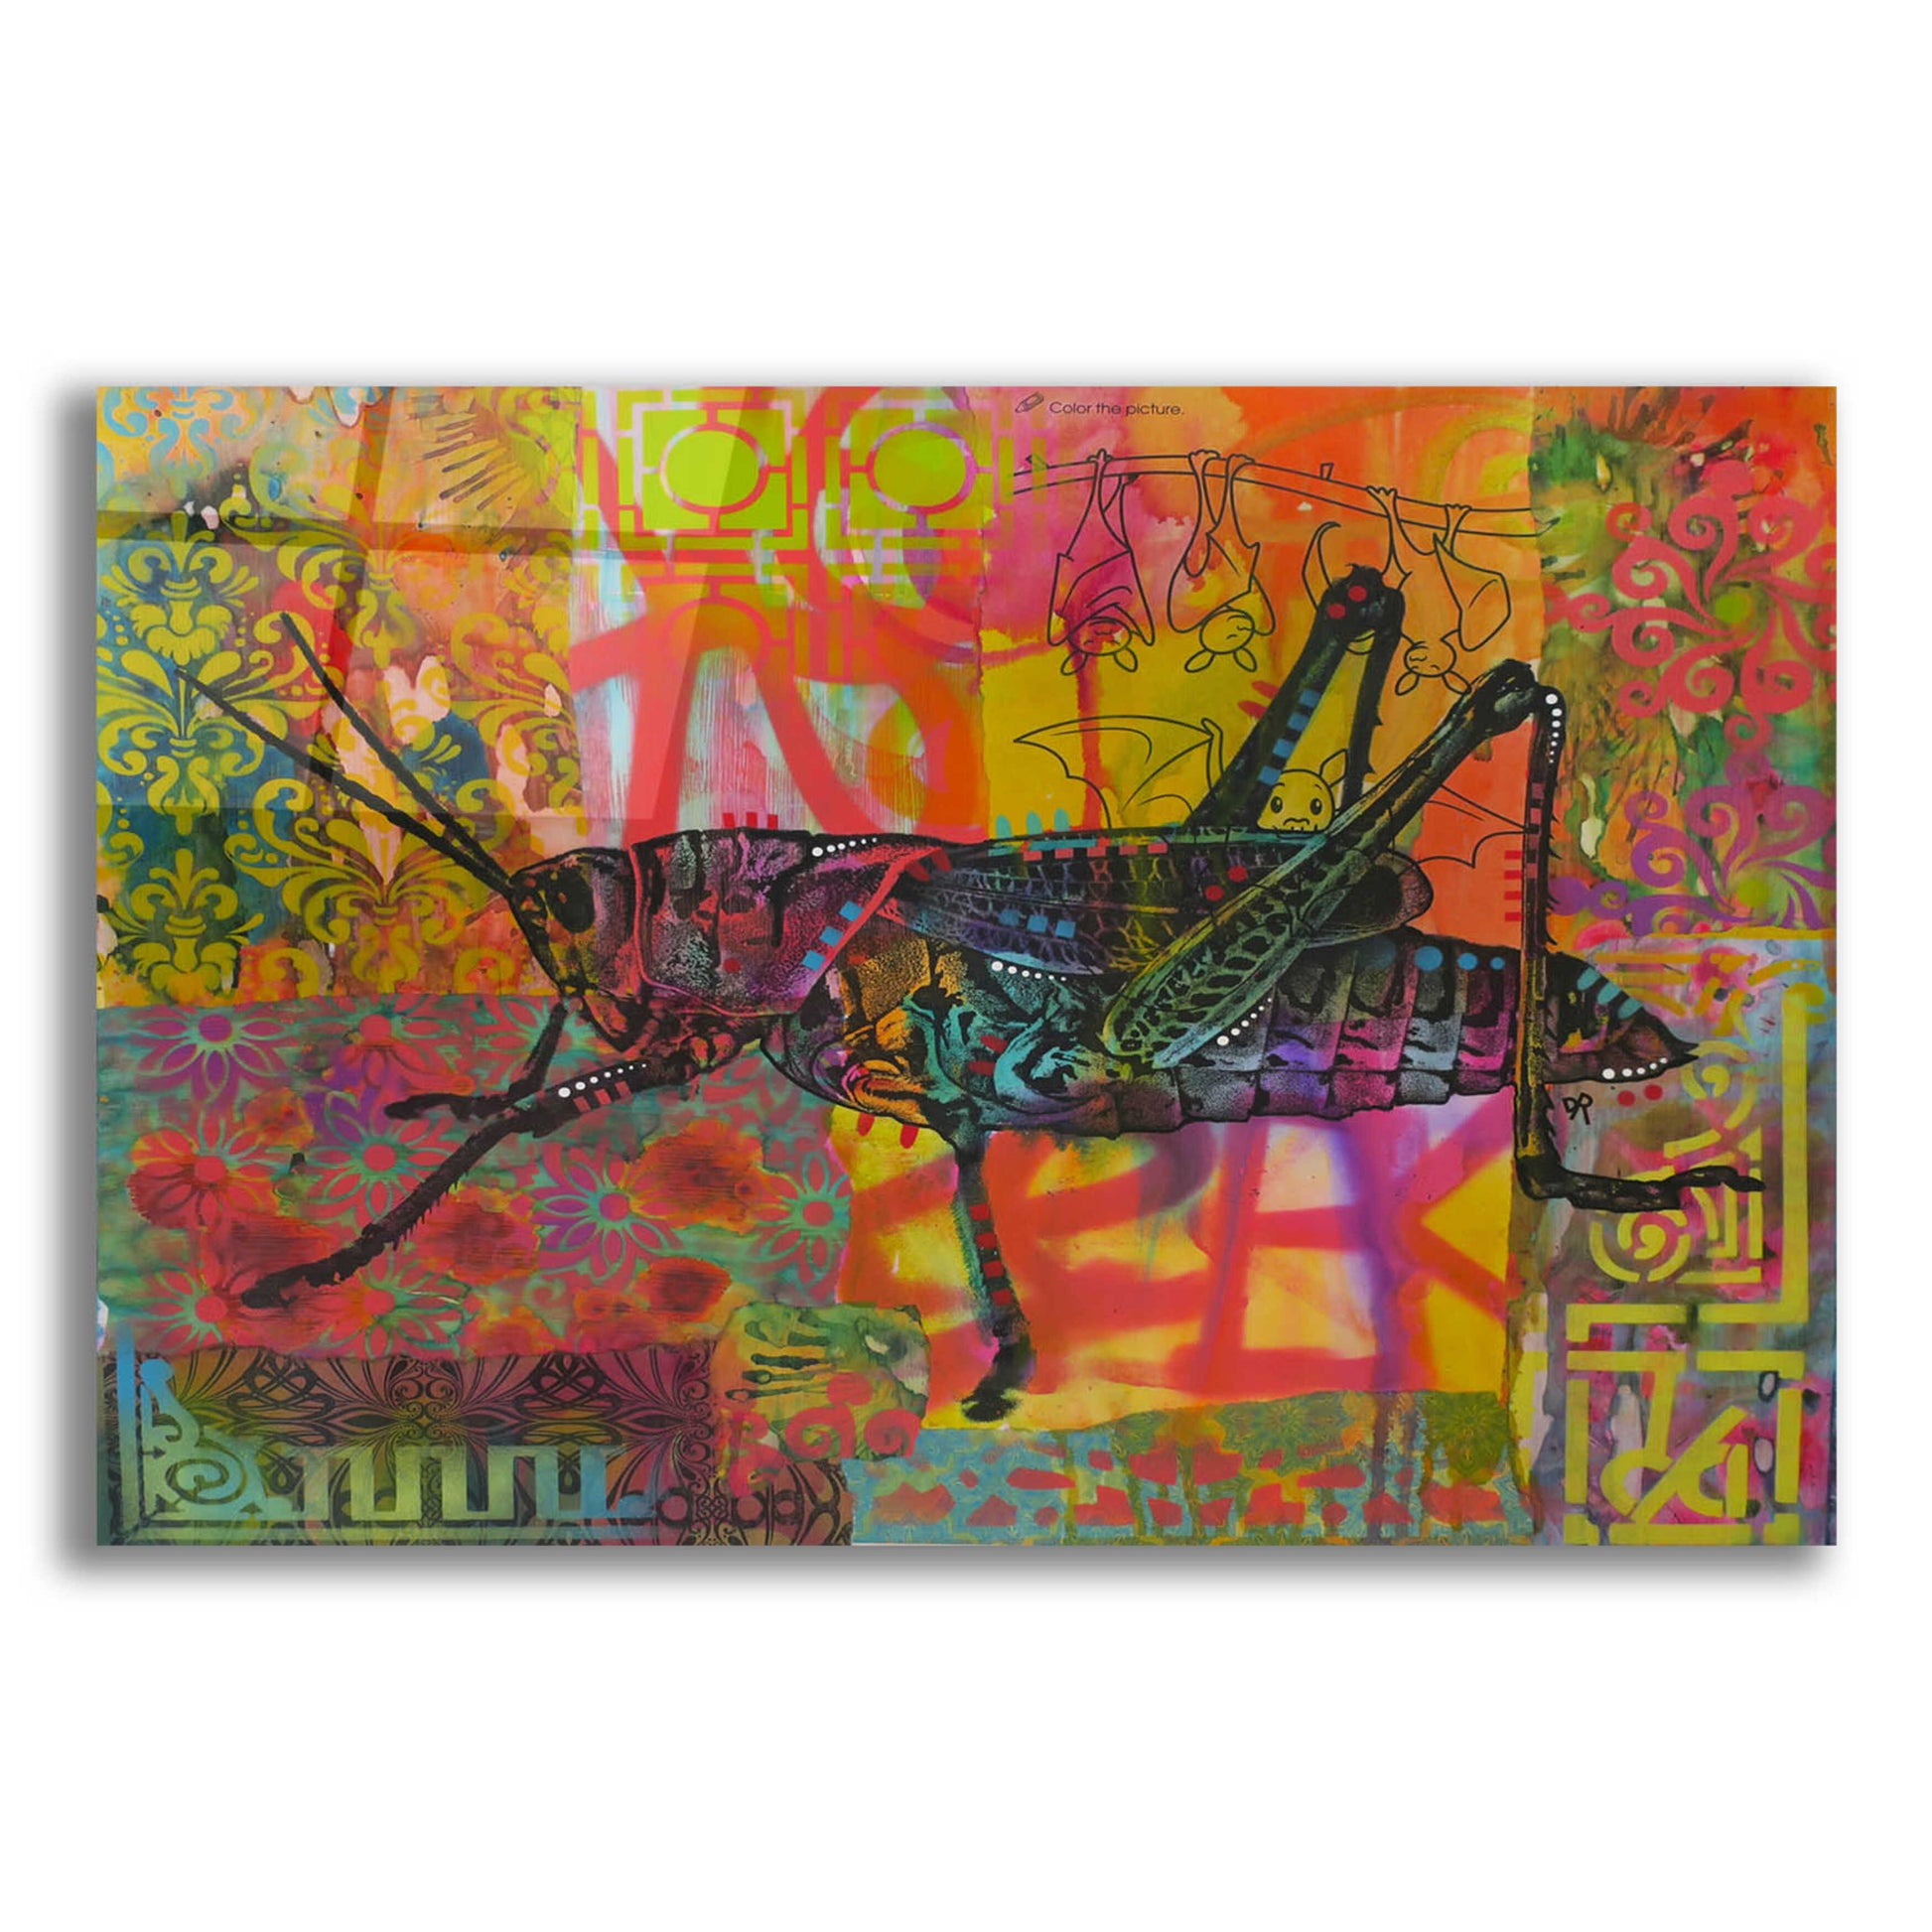 Epic Art 'Grasshopper' by Dean Russo, Acrylic Glass Wall Art,16x12